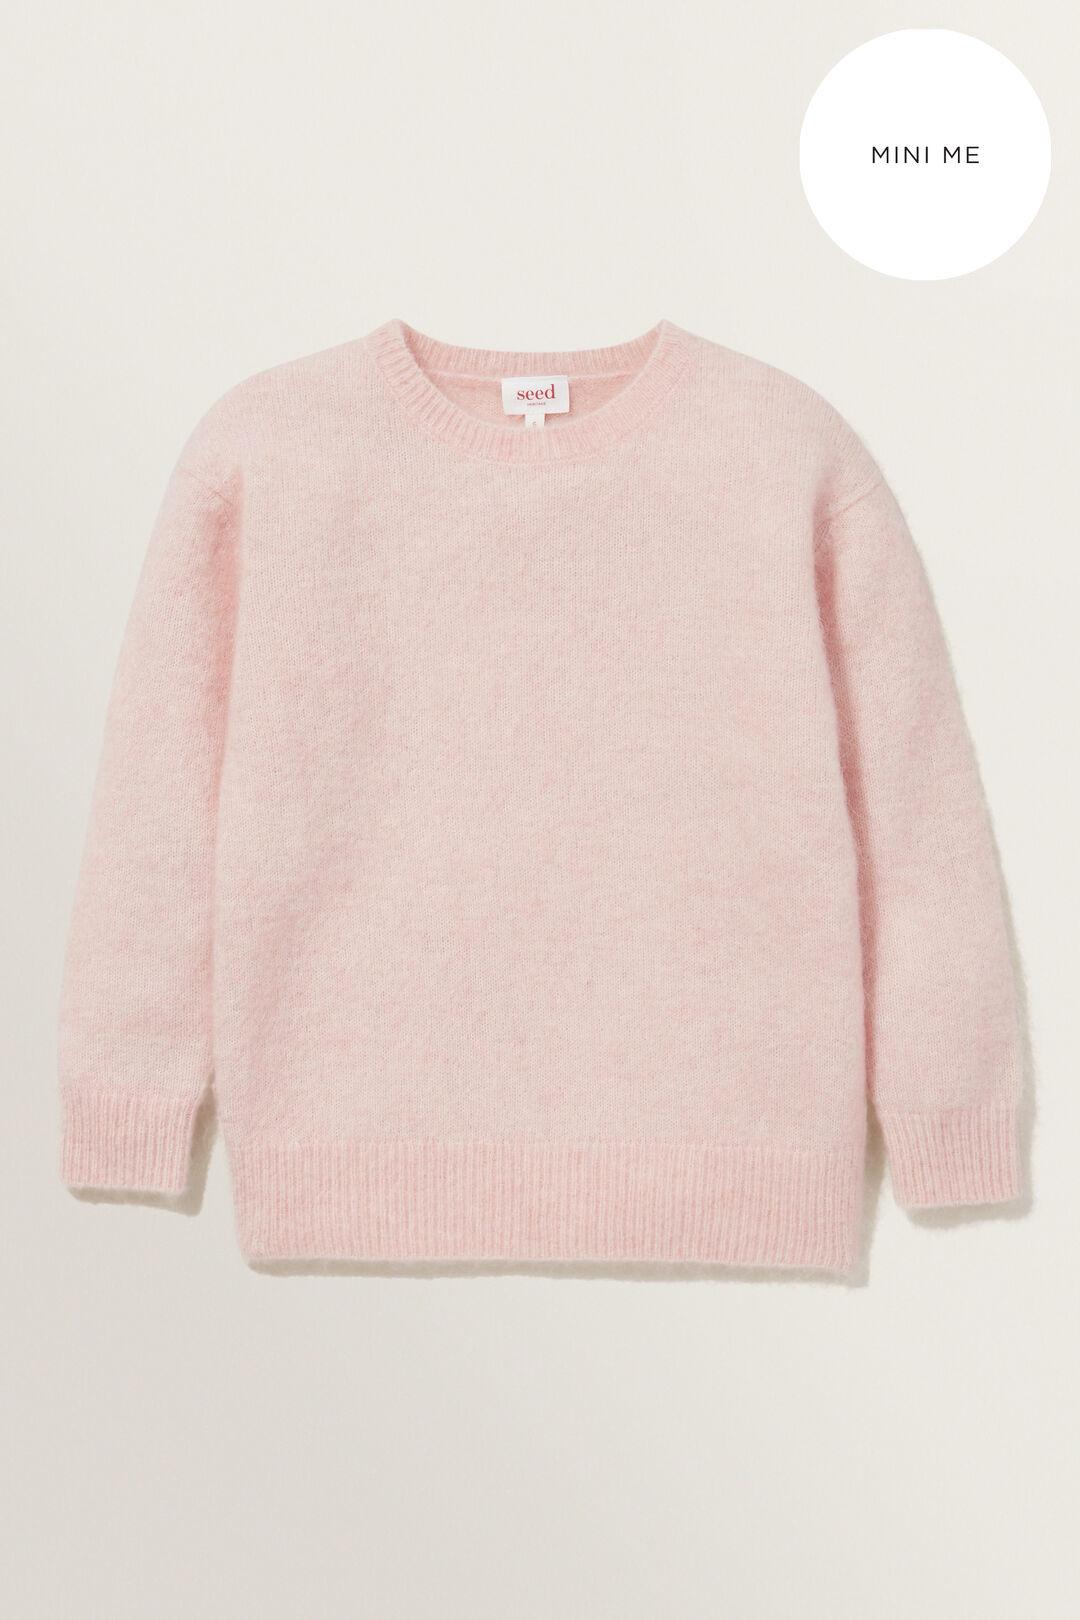 Mini Me Mohair Crew Neck Sweater  Ash Pink Marle  hi-res